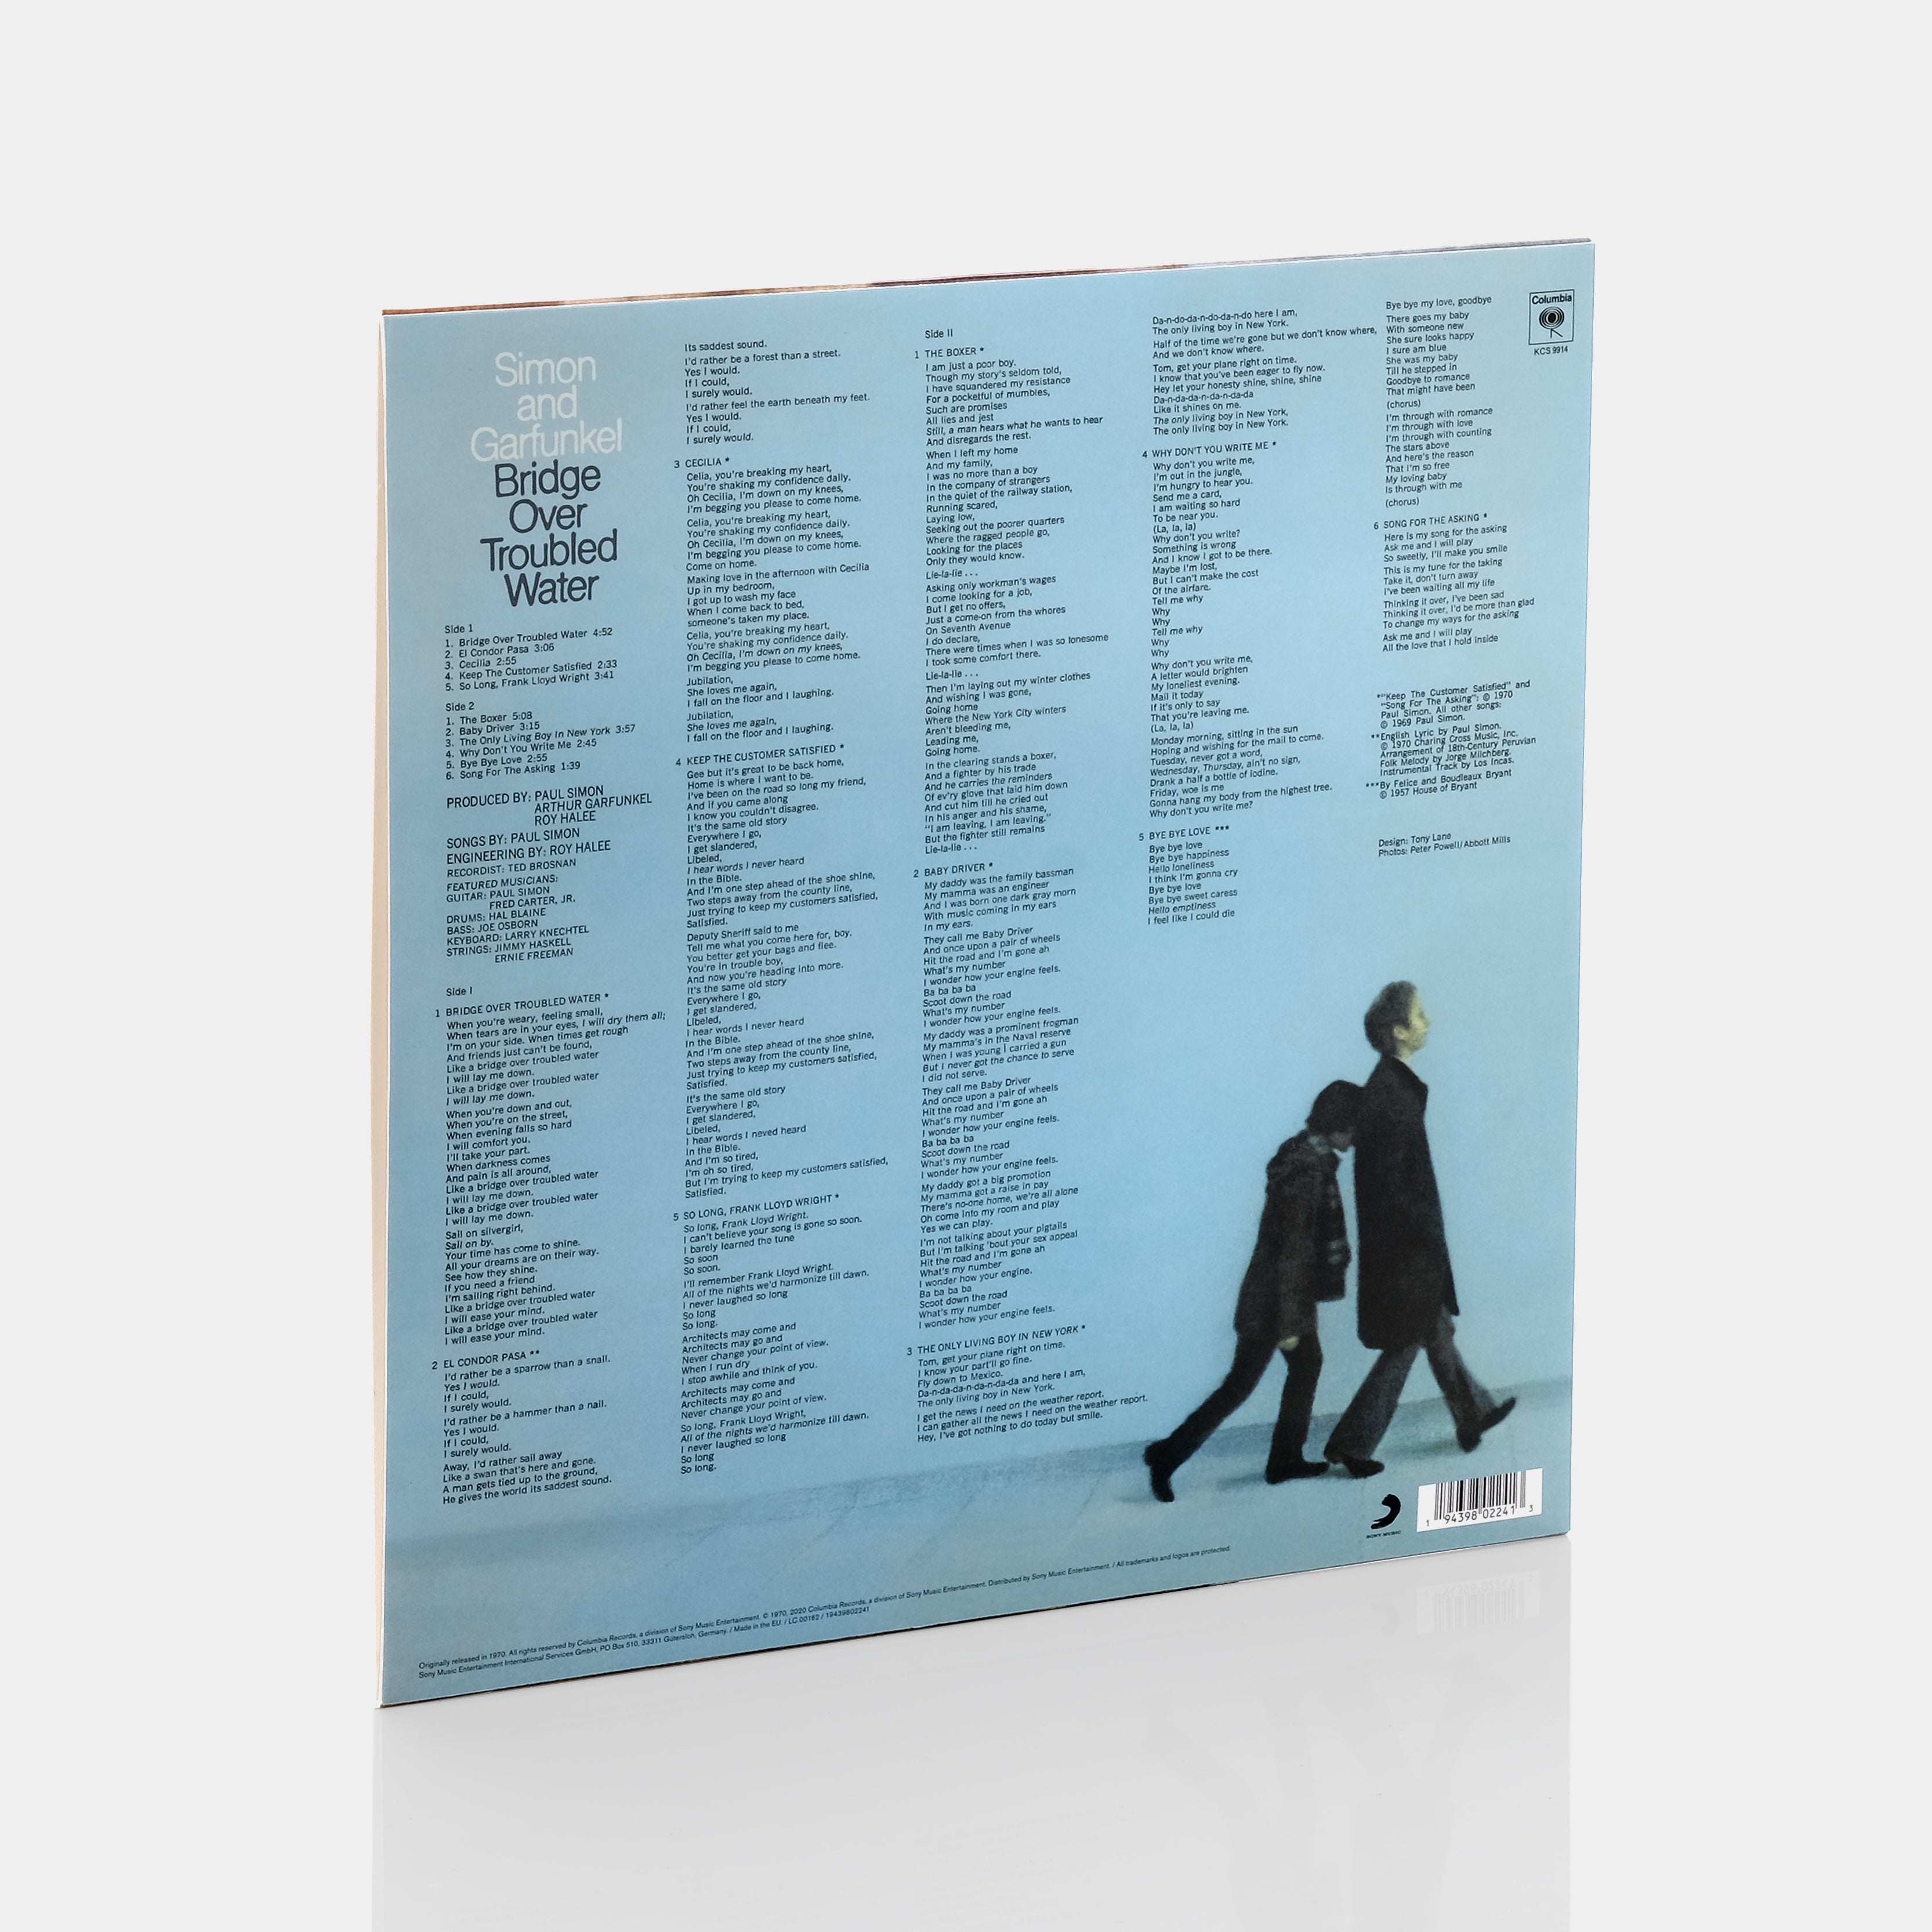 Simon & Garfunkel - Bridge Over Troubled Water LP Clear Vinyl Record